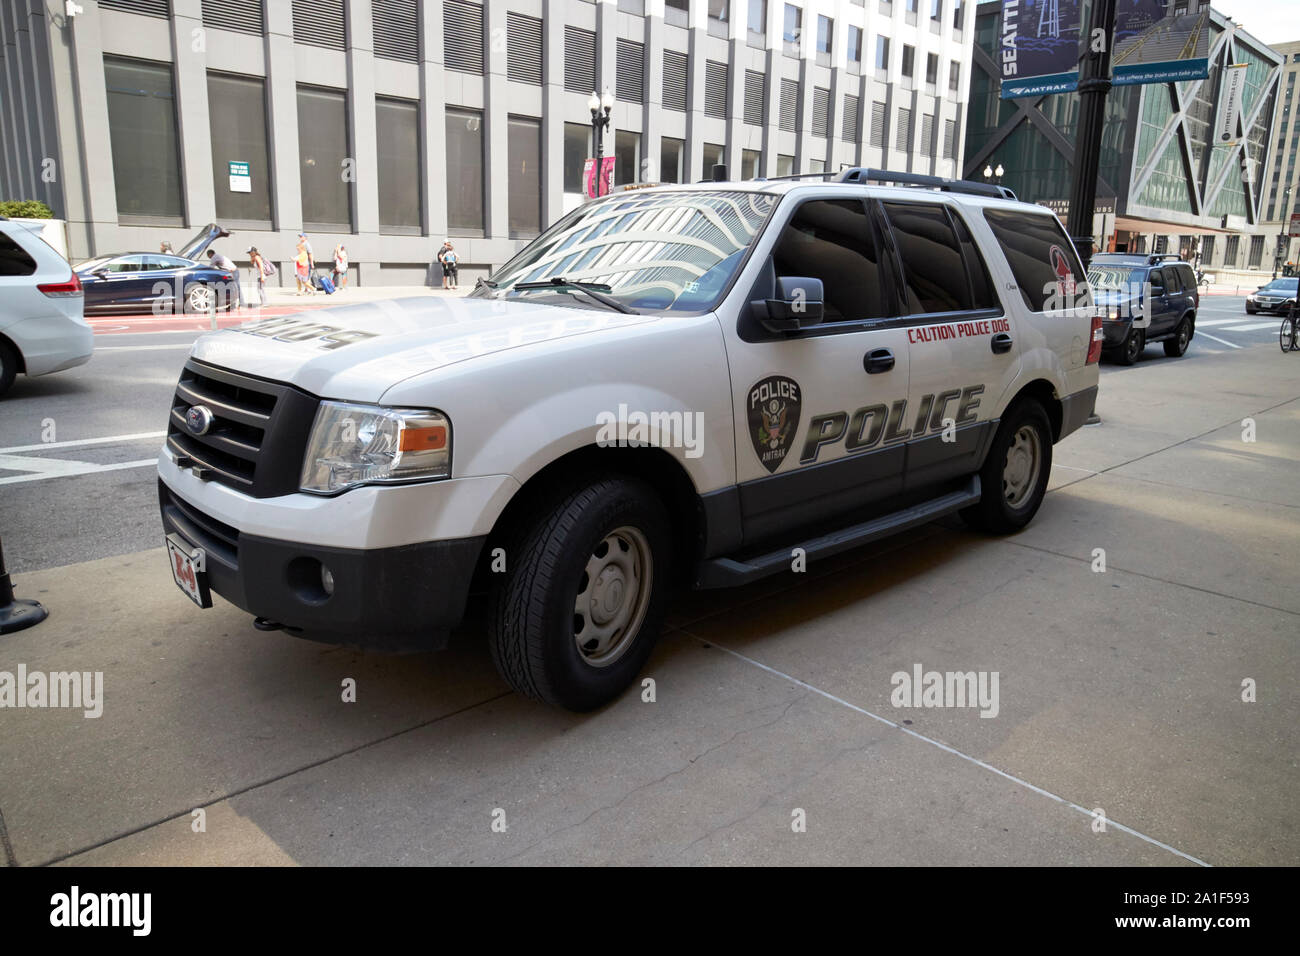 ford suv amtrak police vehicle outside union station chicago illinois united states of america Stock Photo